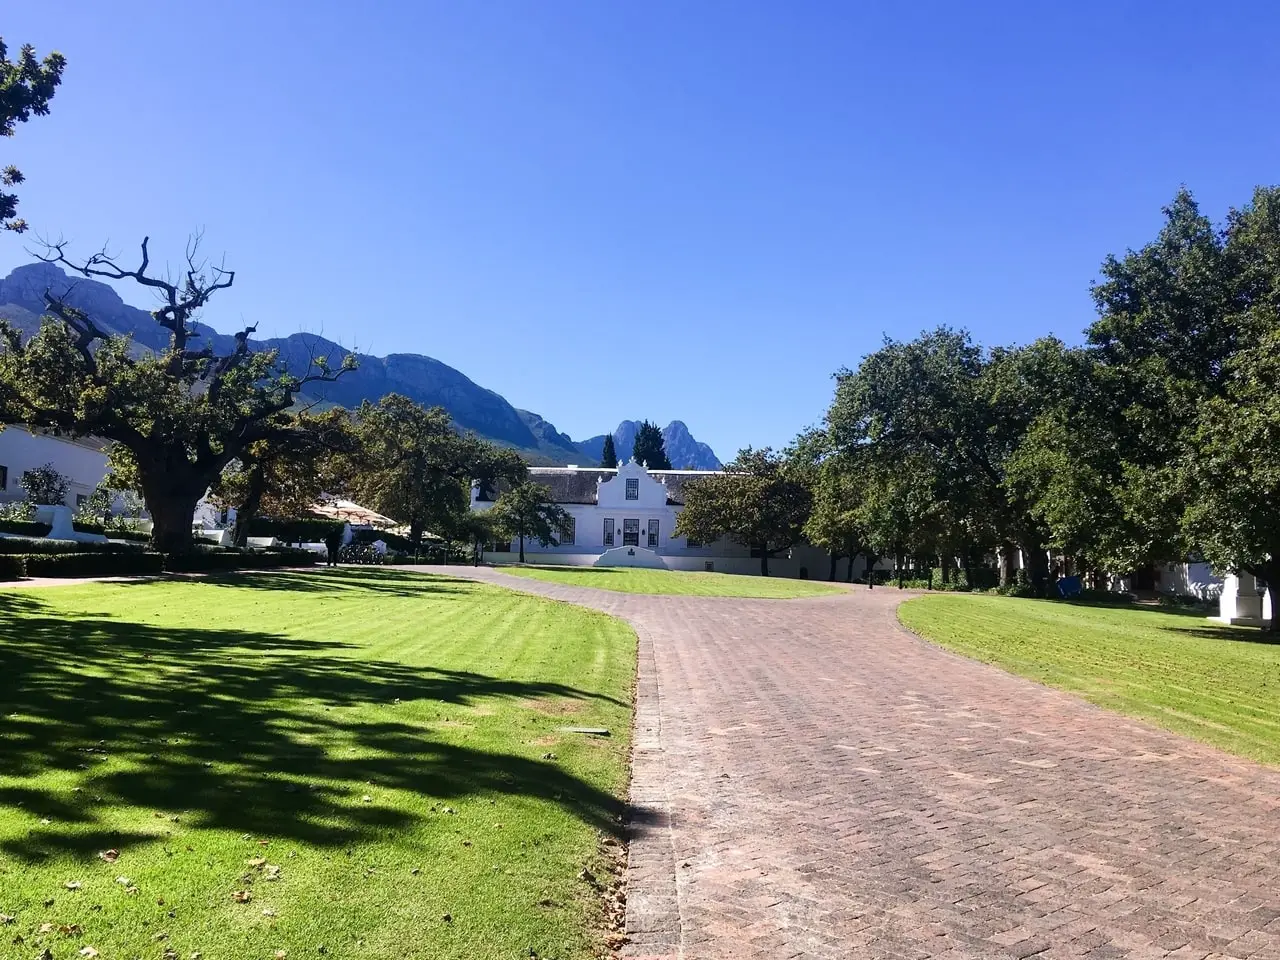 Lanzerac Wine Estate is a popular stop on Stellenbosch Wine Tours